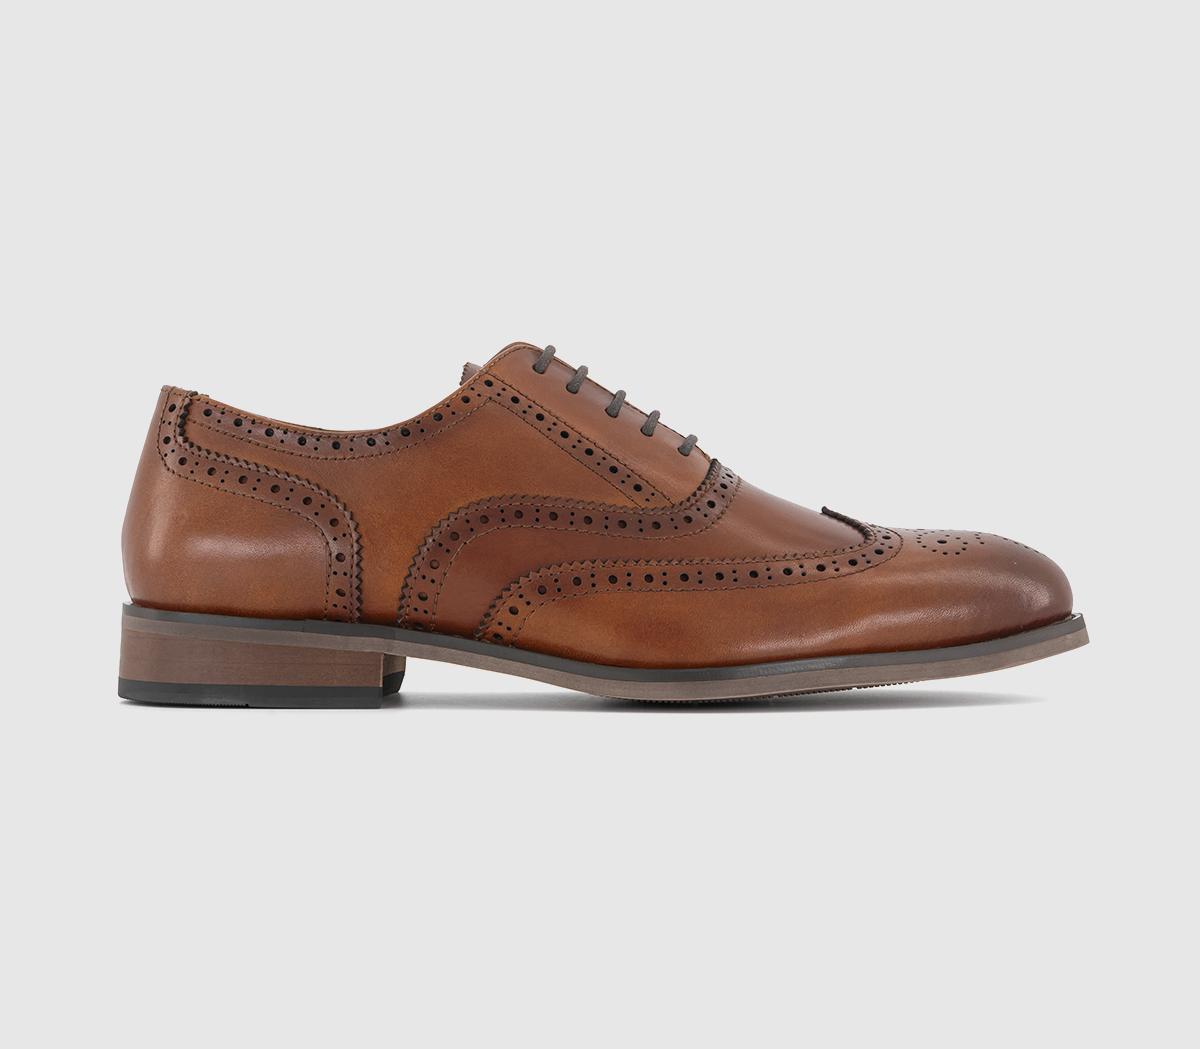 OFFICEMilton Oxford Brogue ShoesTan Leather